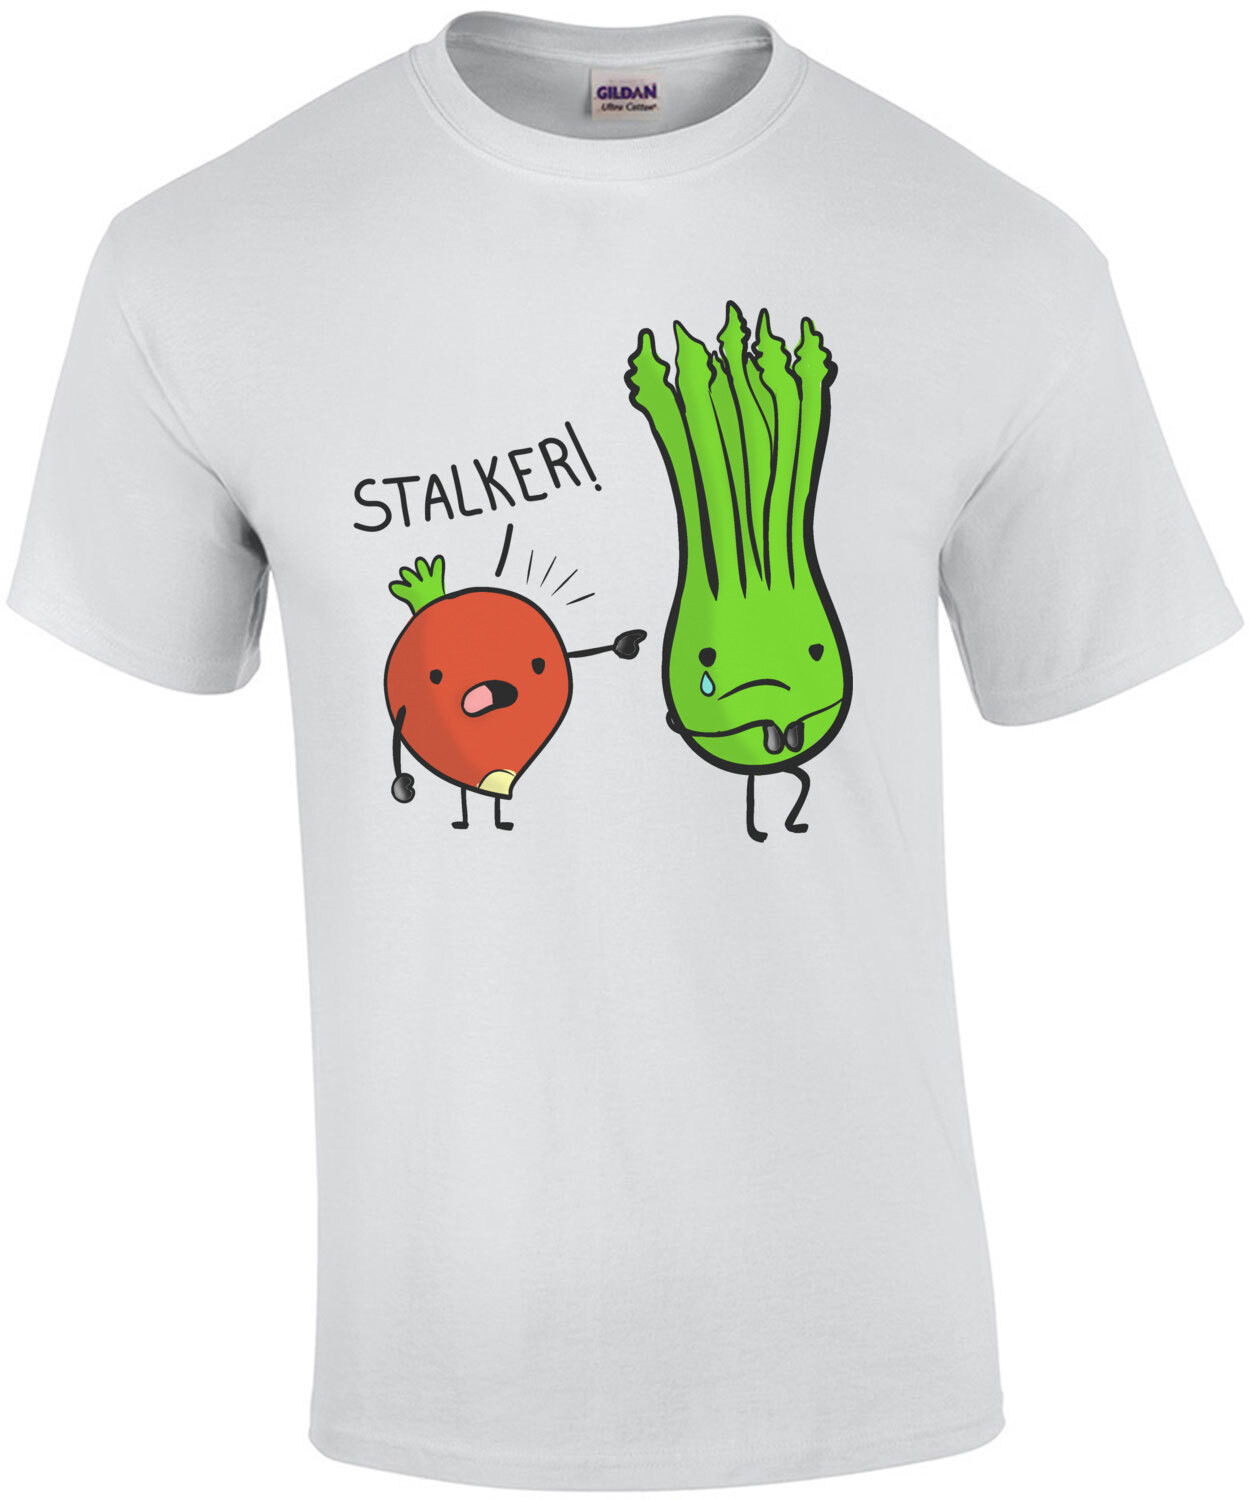 Stalker - Beet and Celery food pun t-shirt